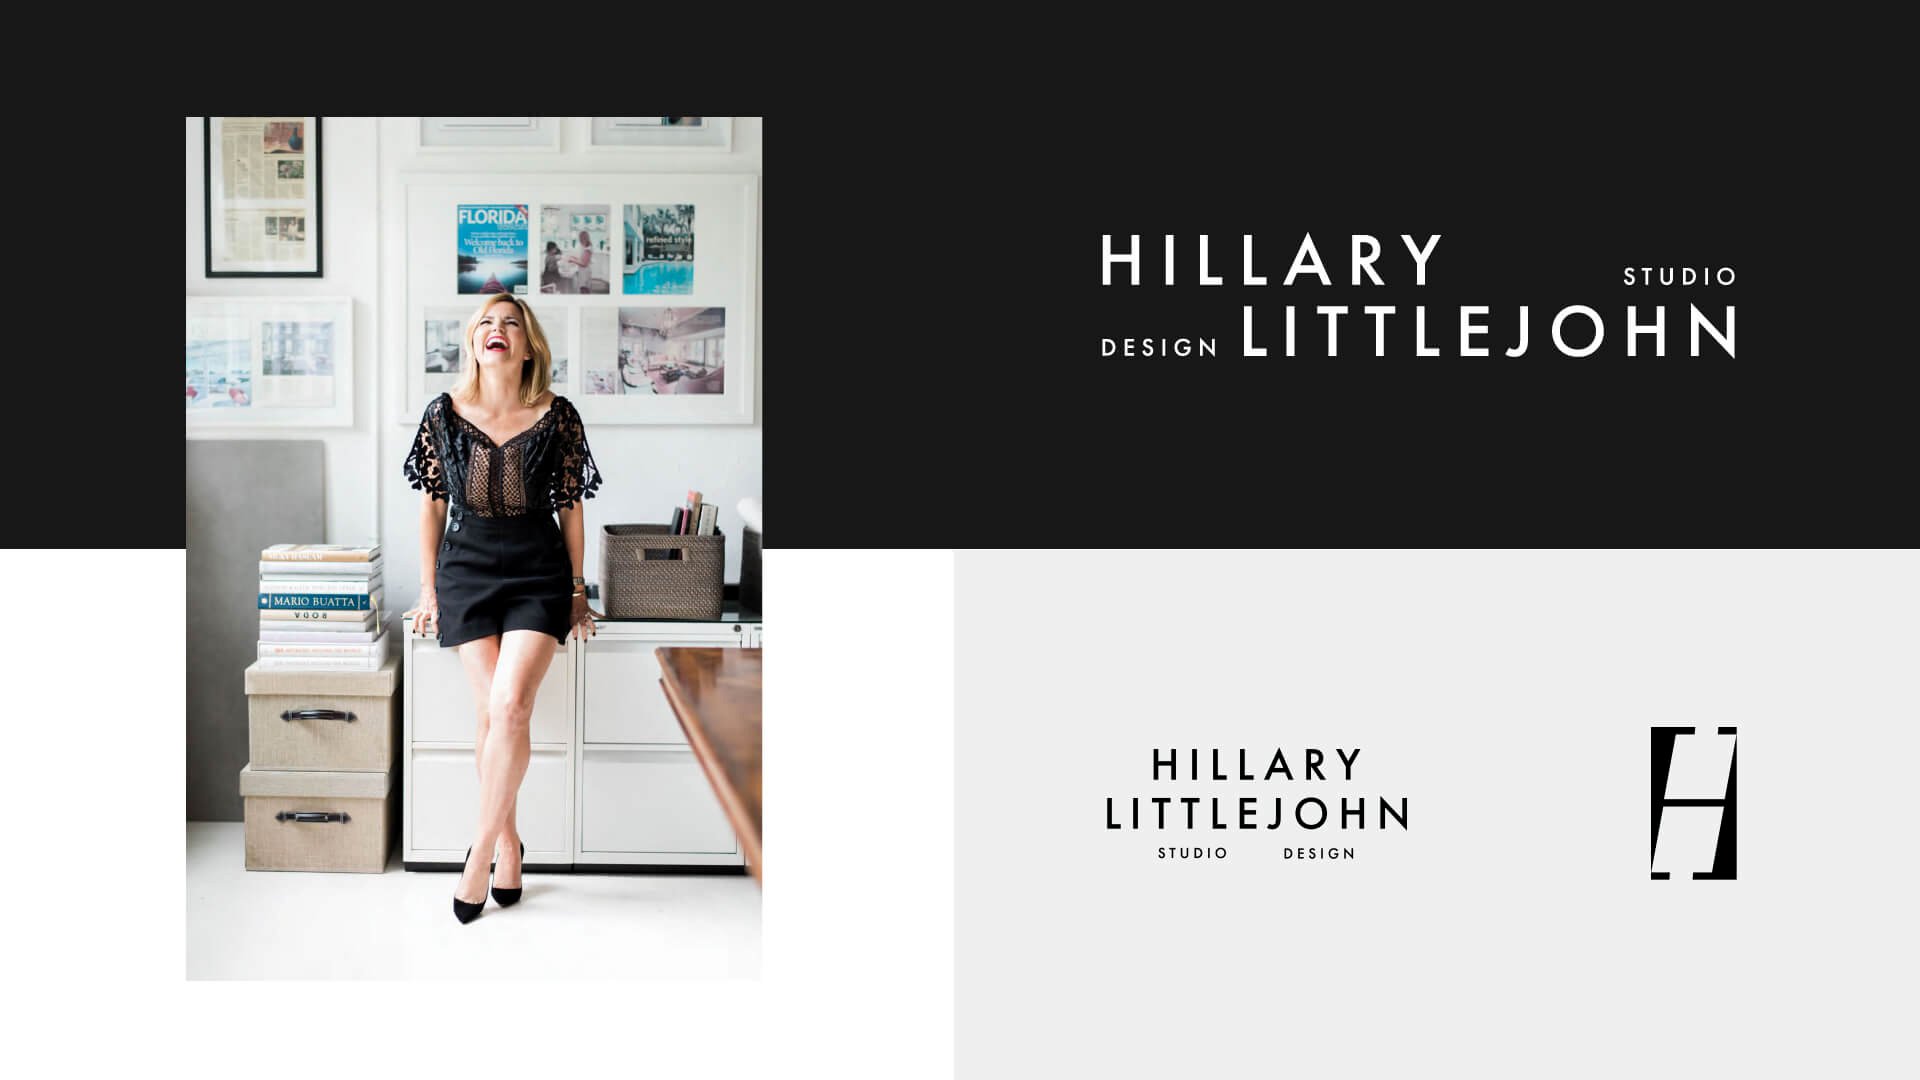 Hillary Littlejohn Studio Design logo variations. Horizontal, Stacked, and Symbol.